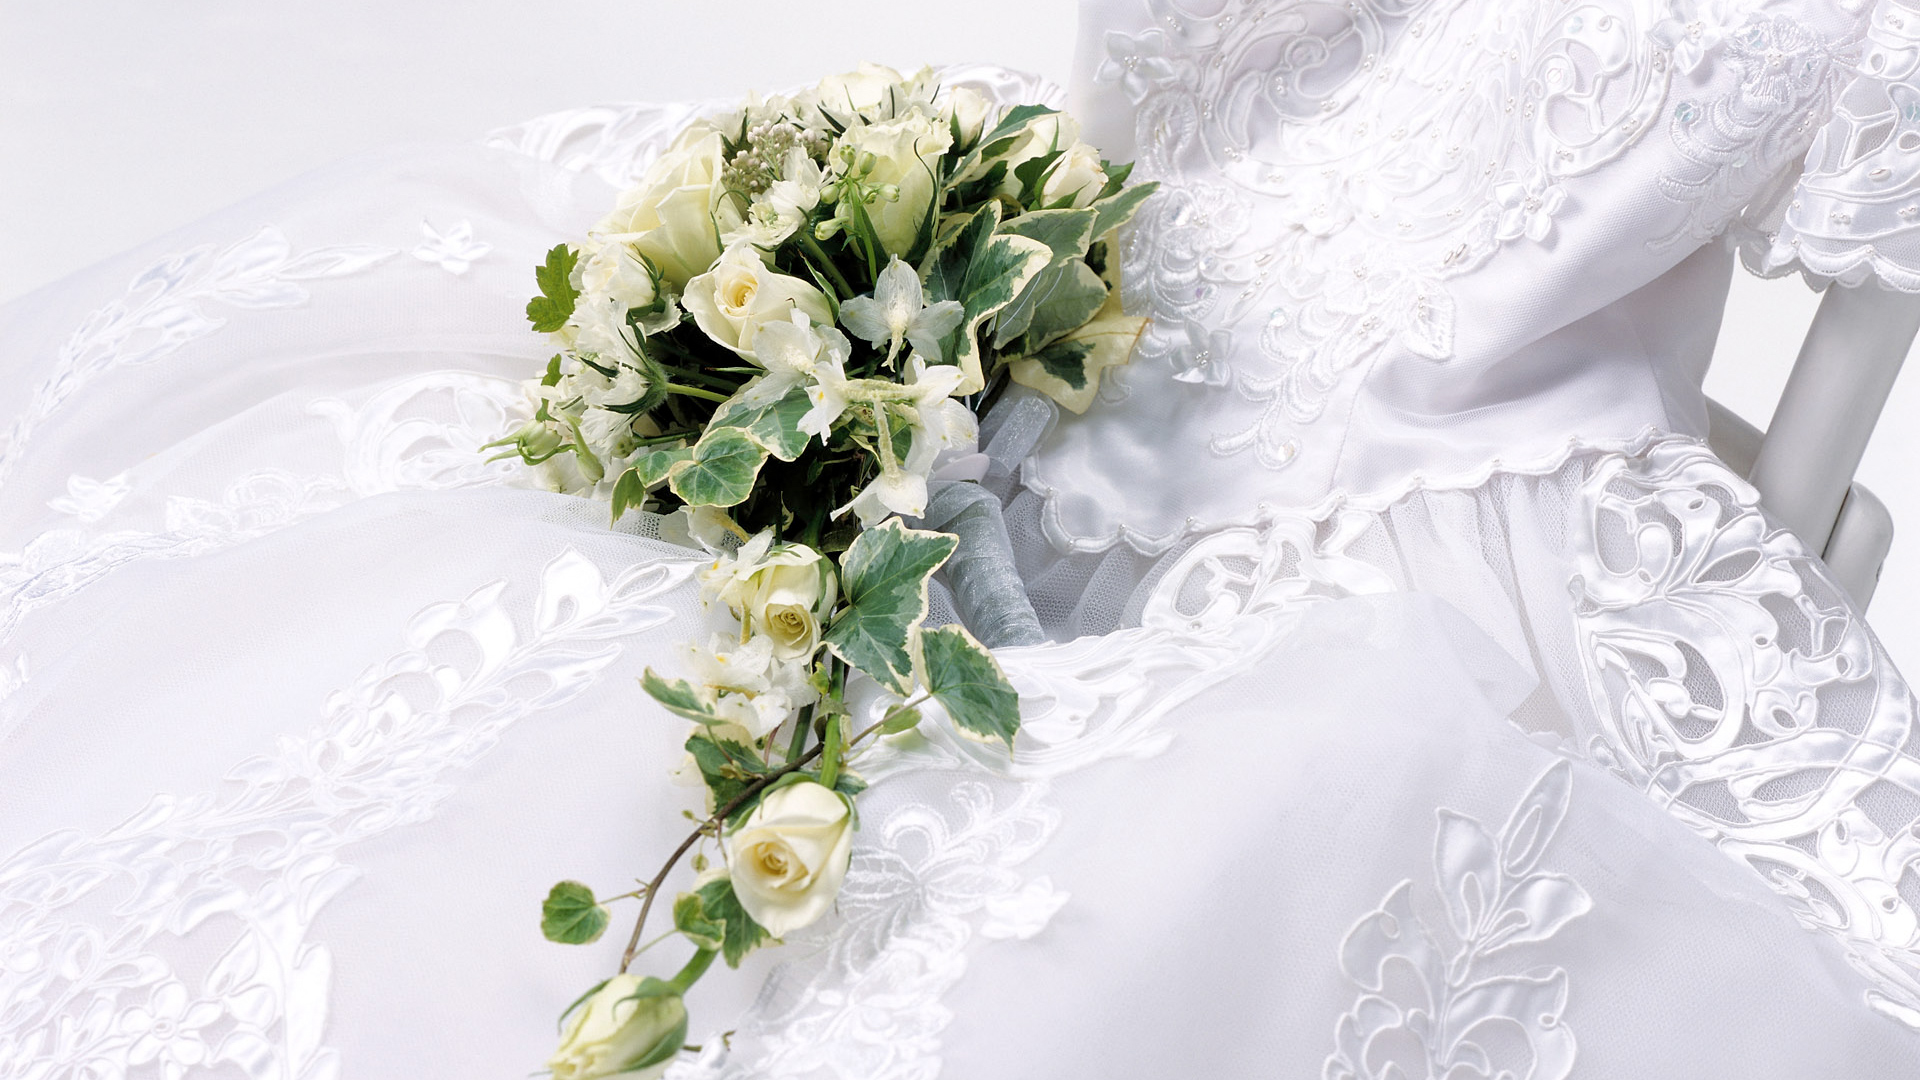 30k Wedding Flowers Pictures  Download Free Images on Unsplash